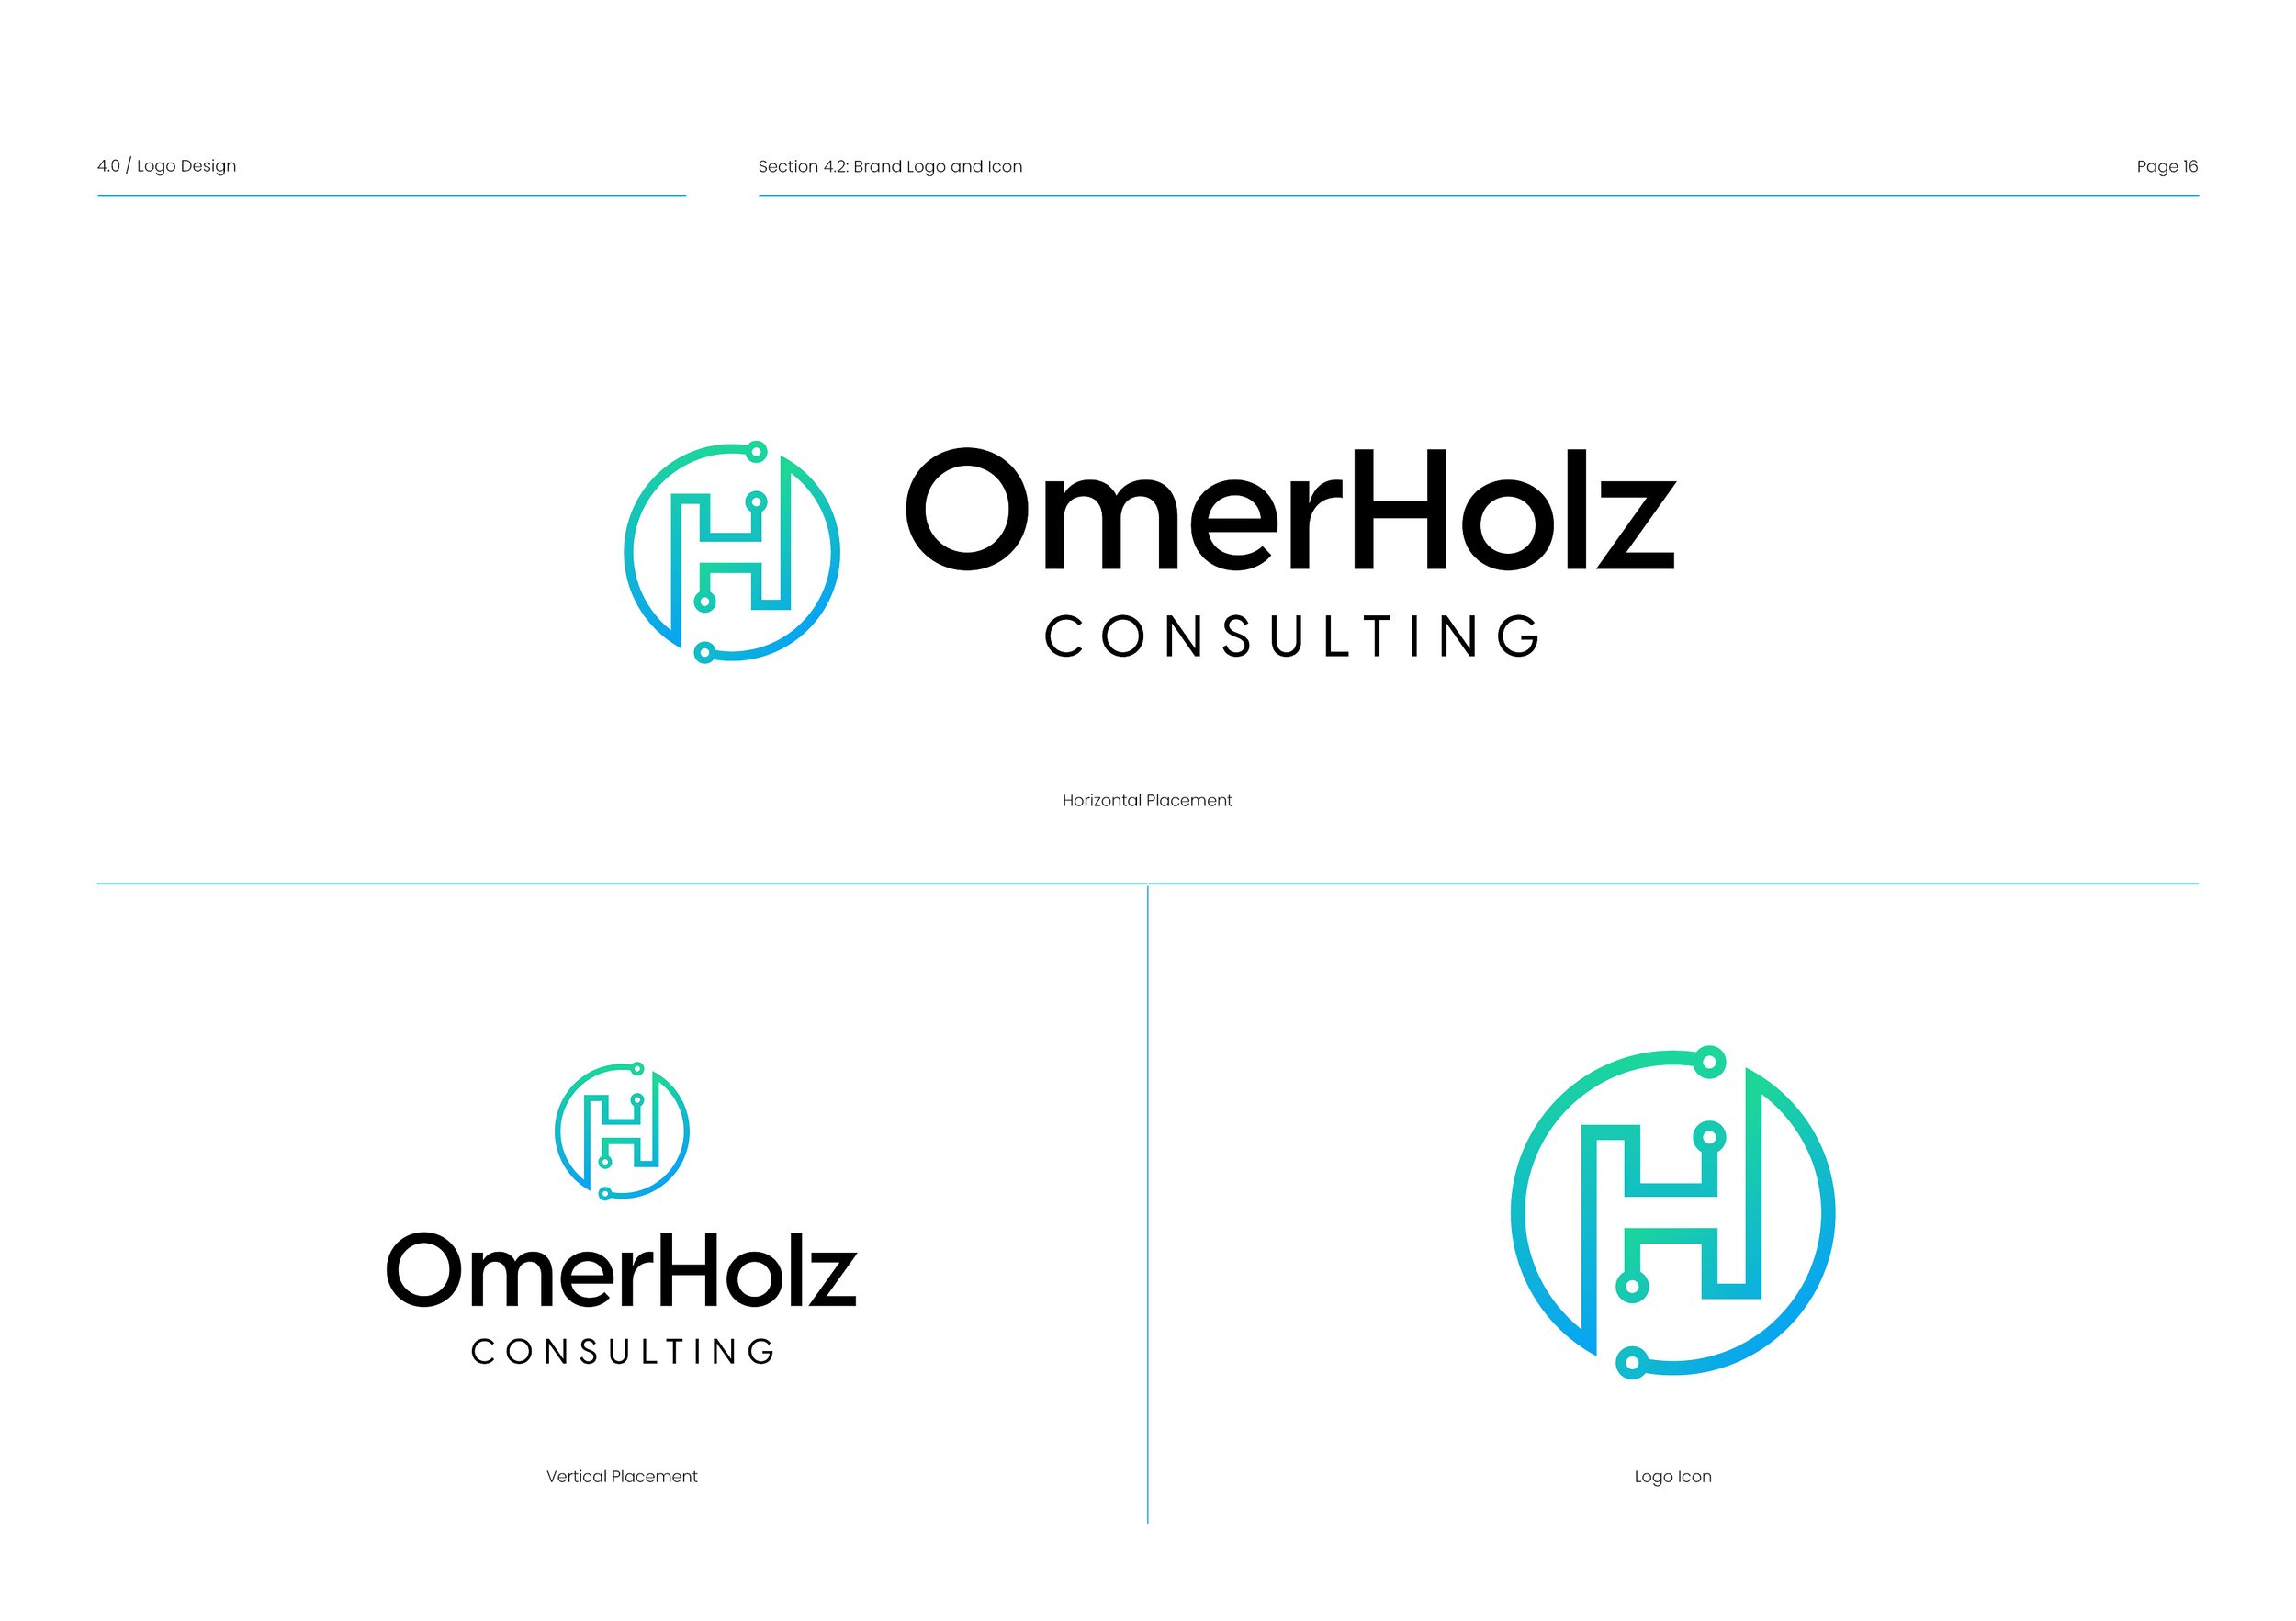 Omer Holz Consulting - Brand Identity16.jpg